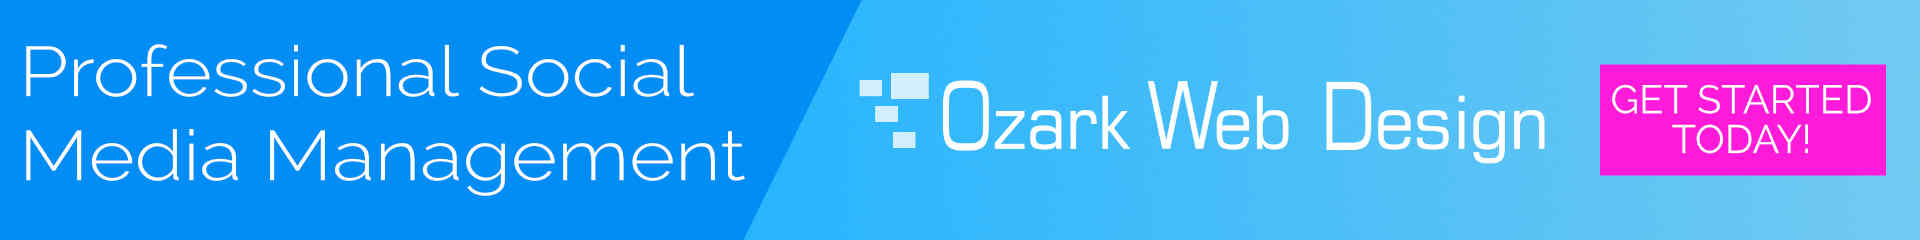 Ad - Professional social media management help by Ozark Web Design